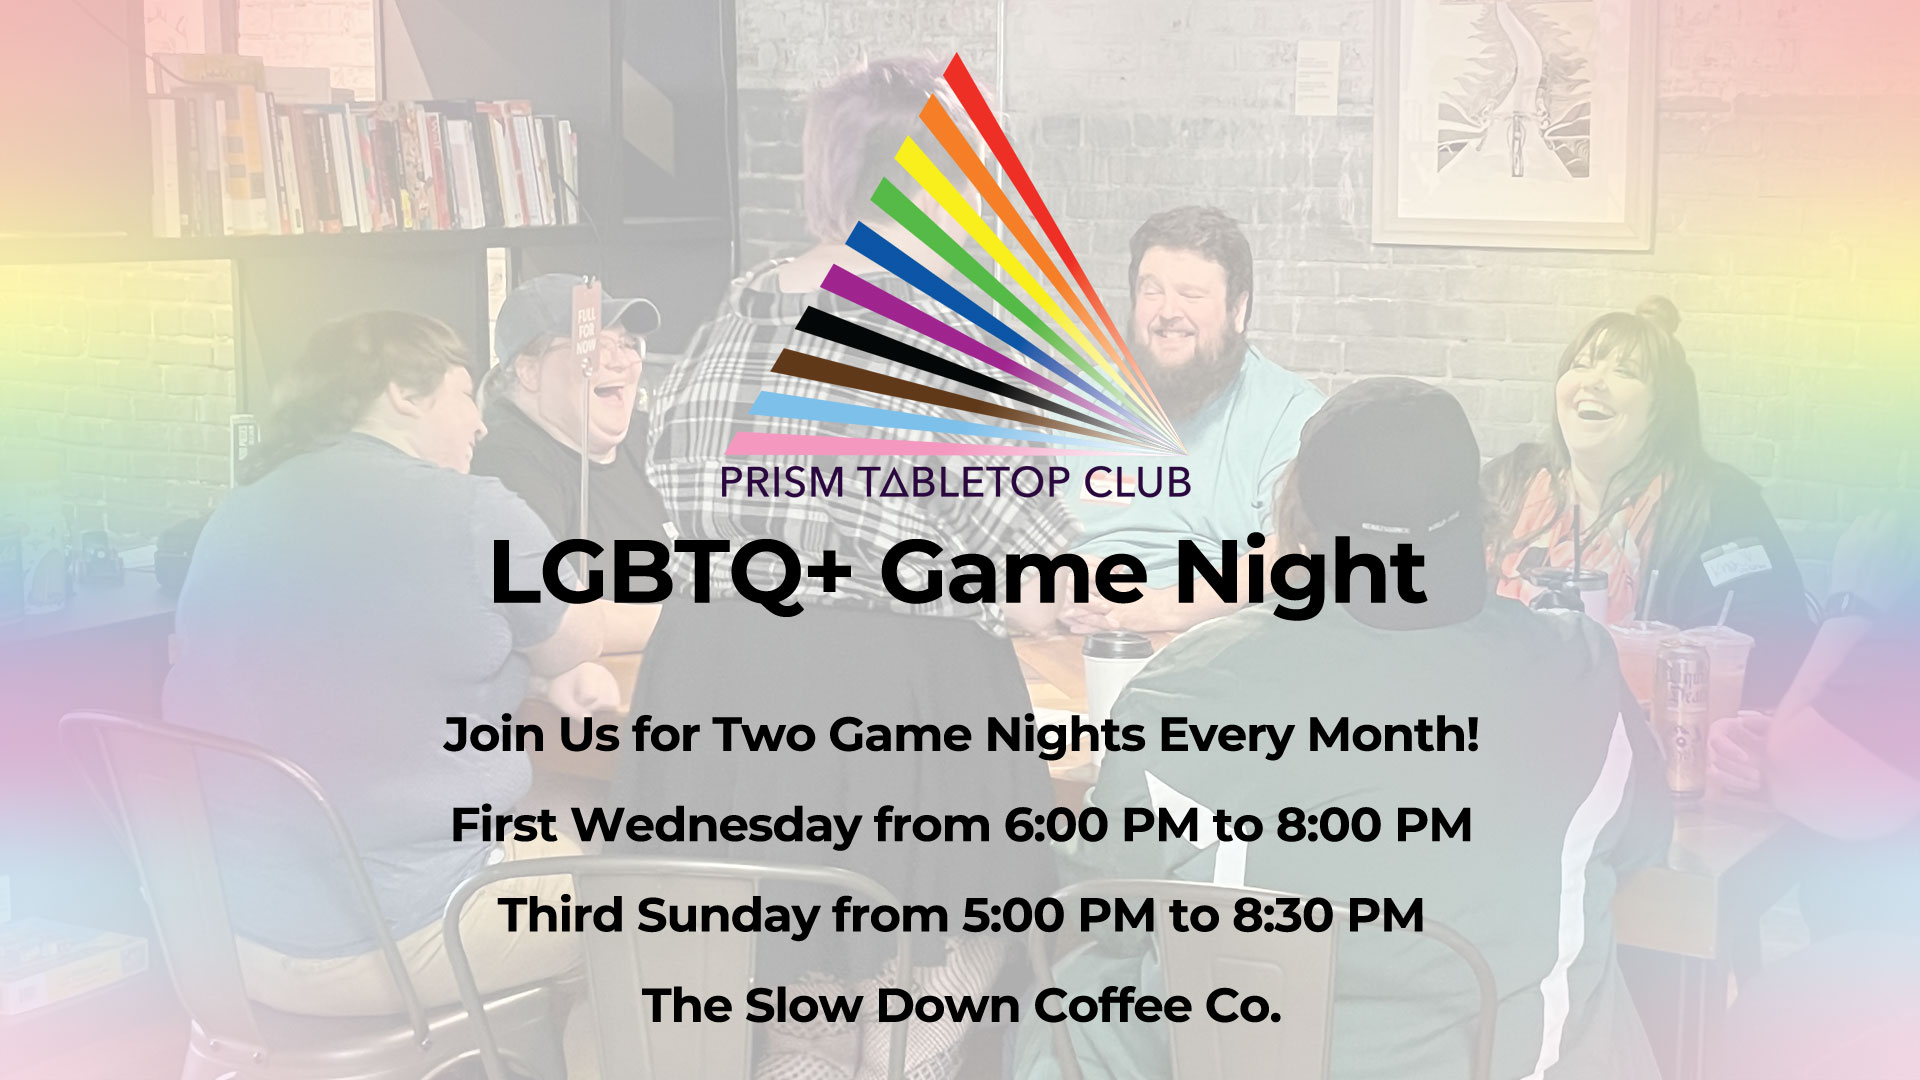 Prism Tabletop Club LGBTQ+ Game Night Event Image